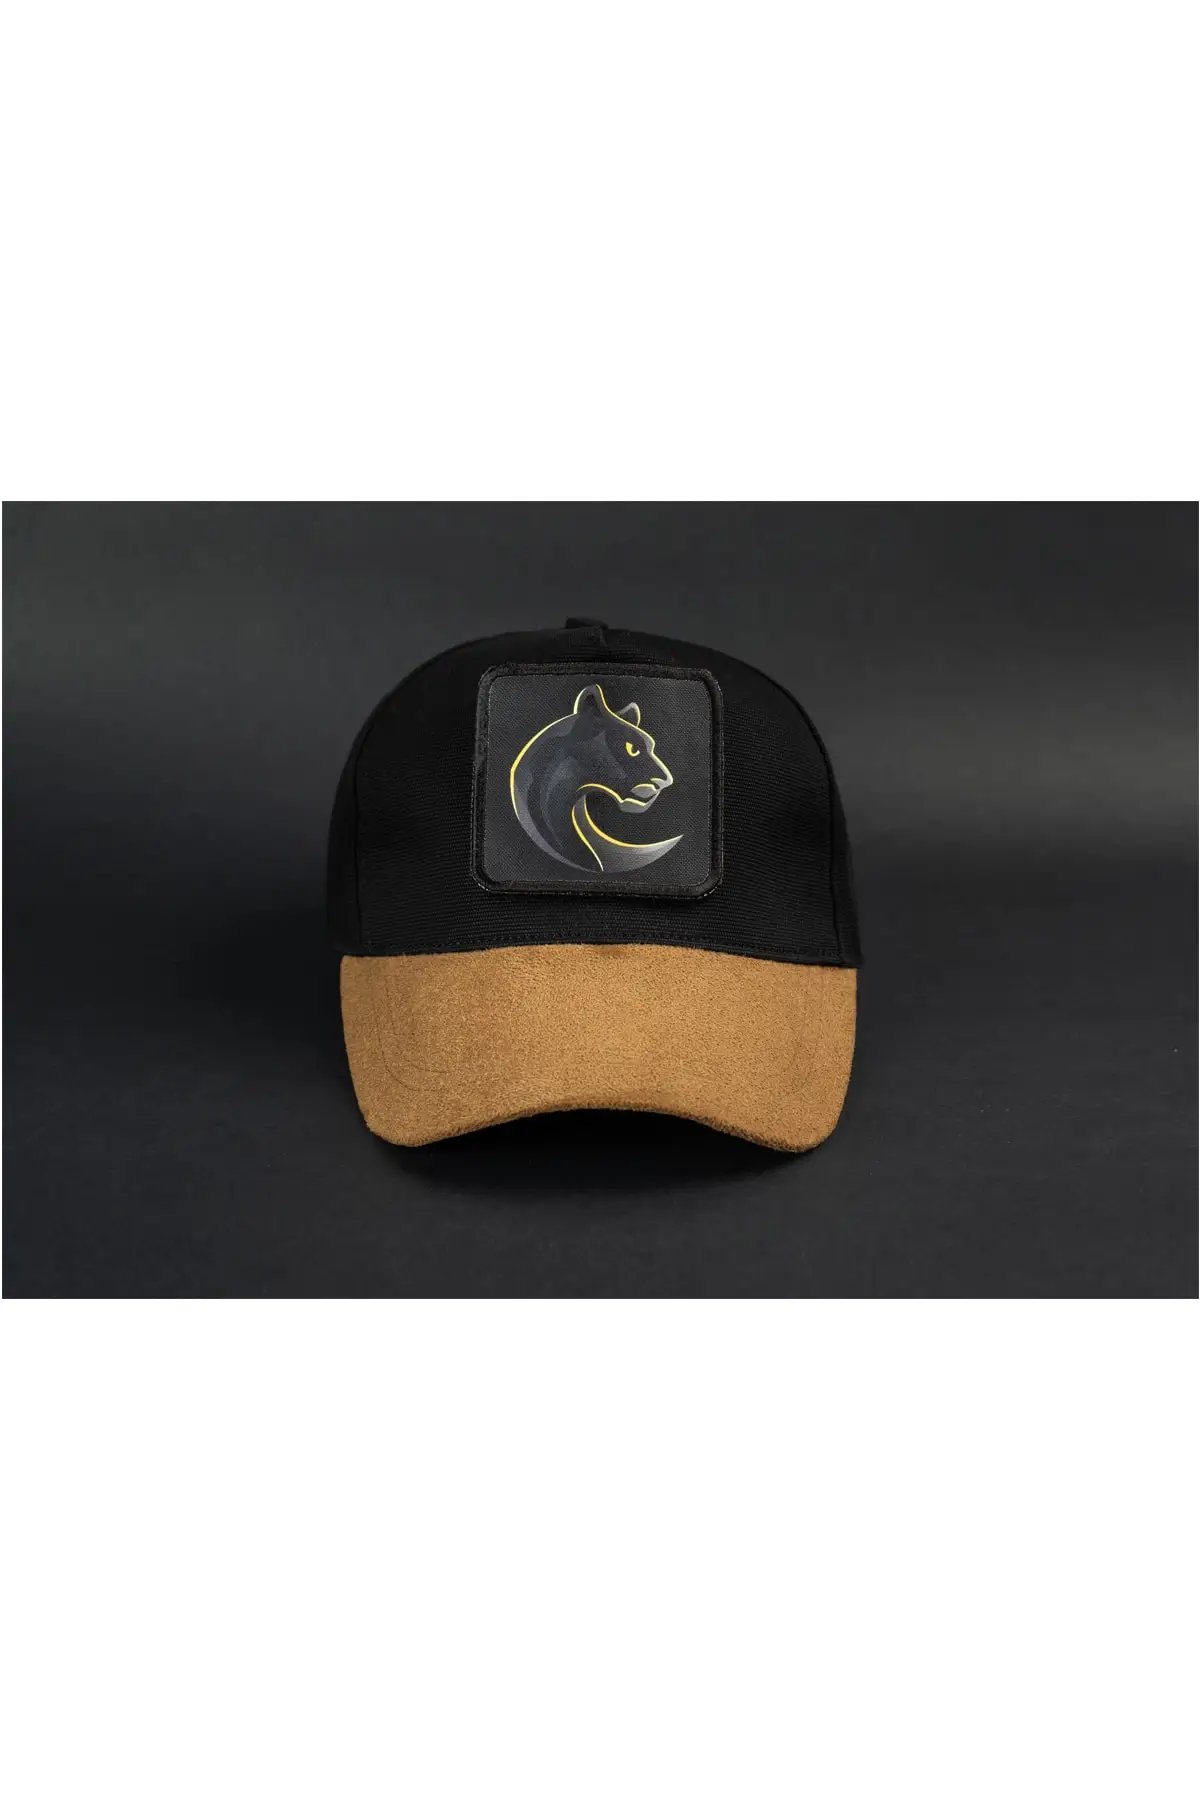 

Baseball Cap Black Hat Tiger Patched Hat Reflective Back Patch Hat Unisex Adult Suede Hat